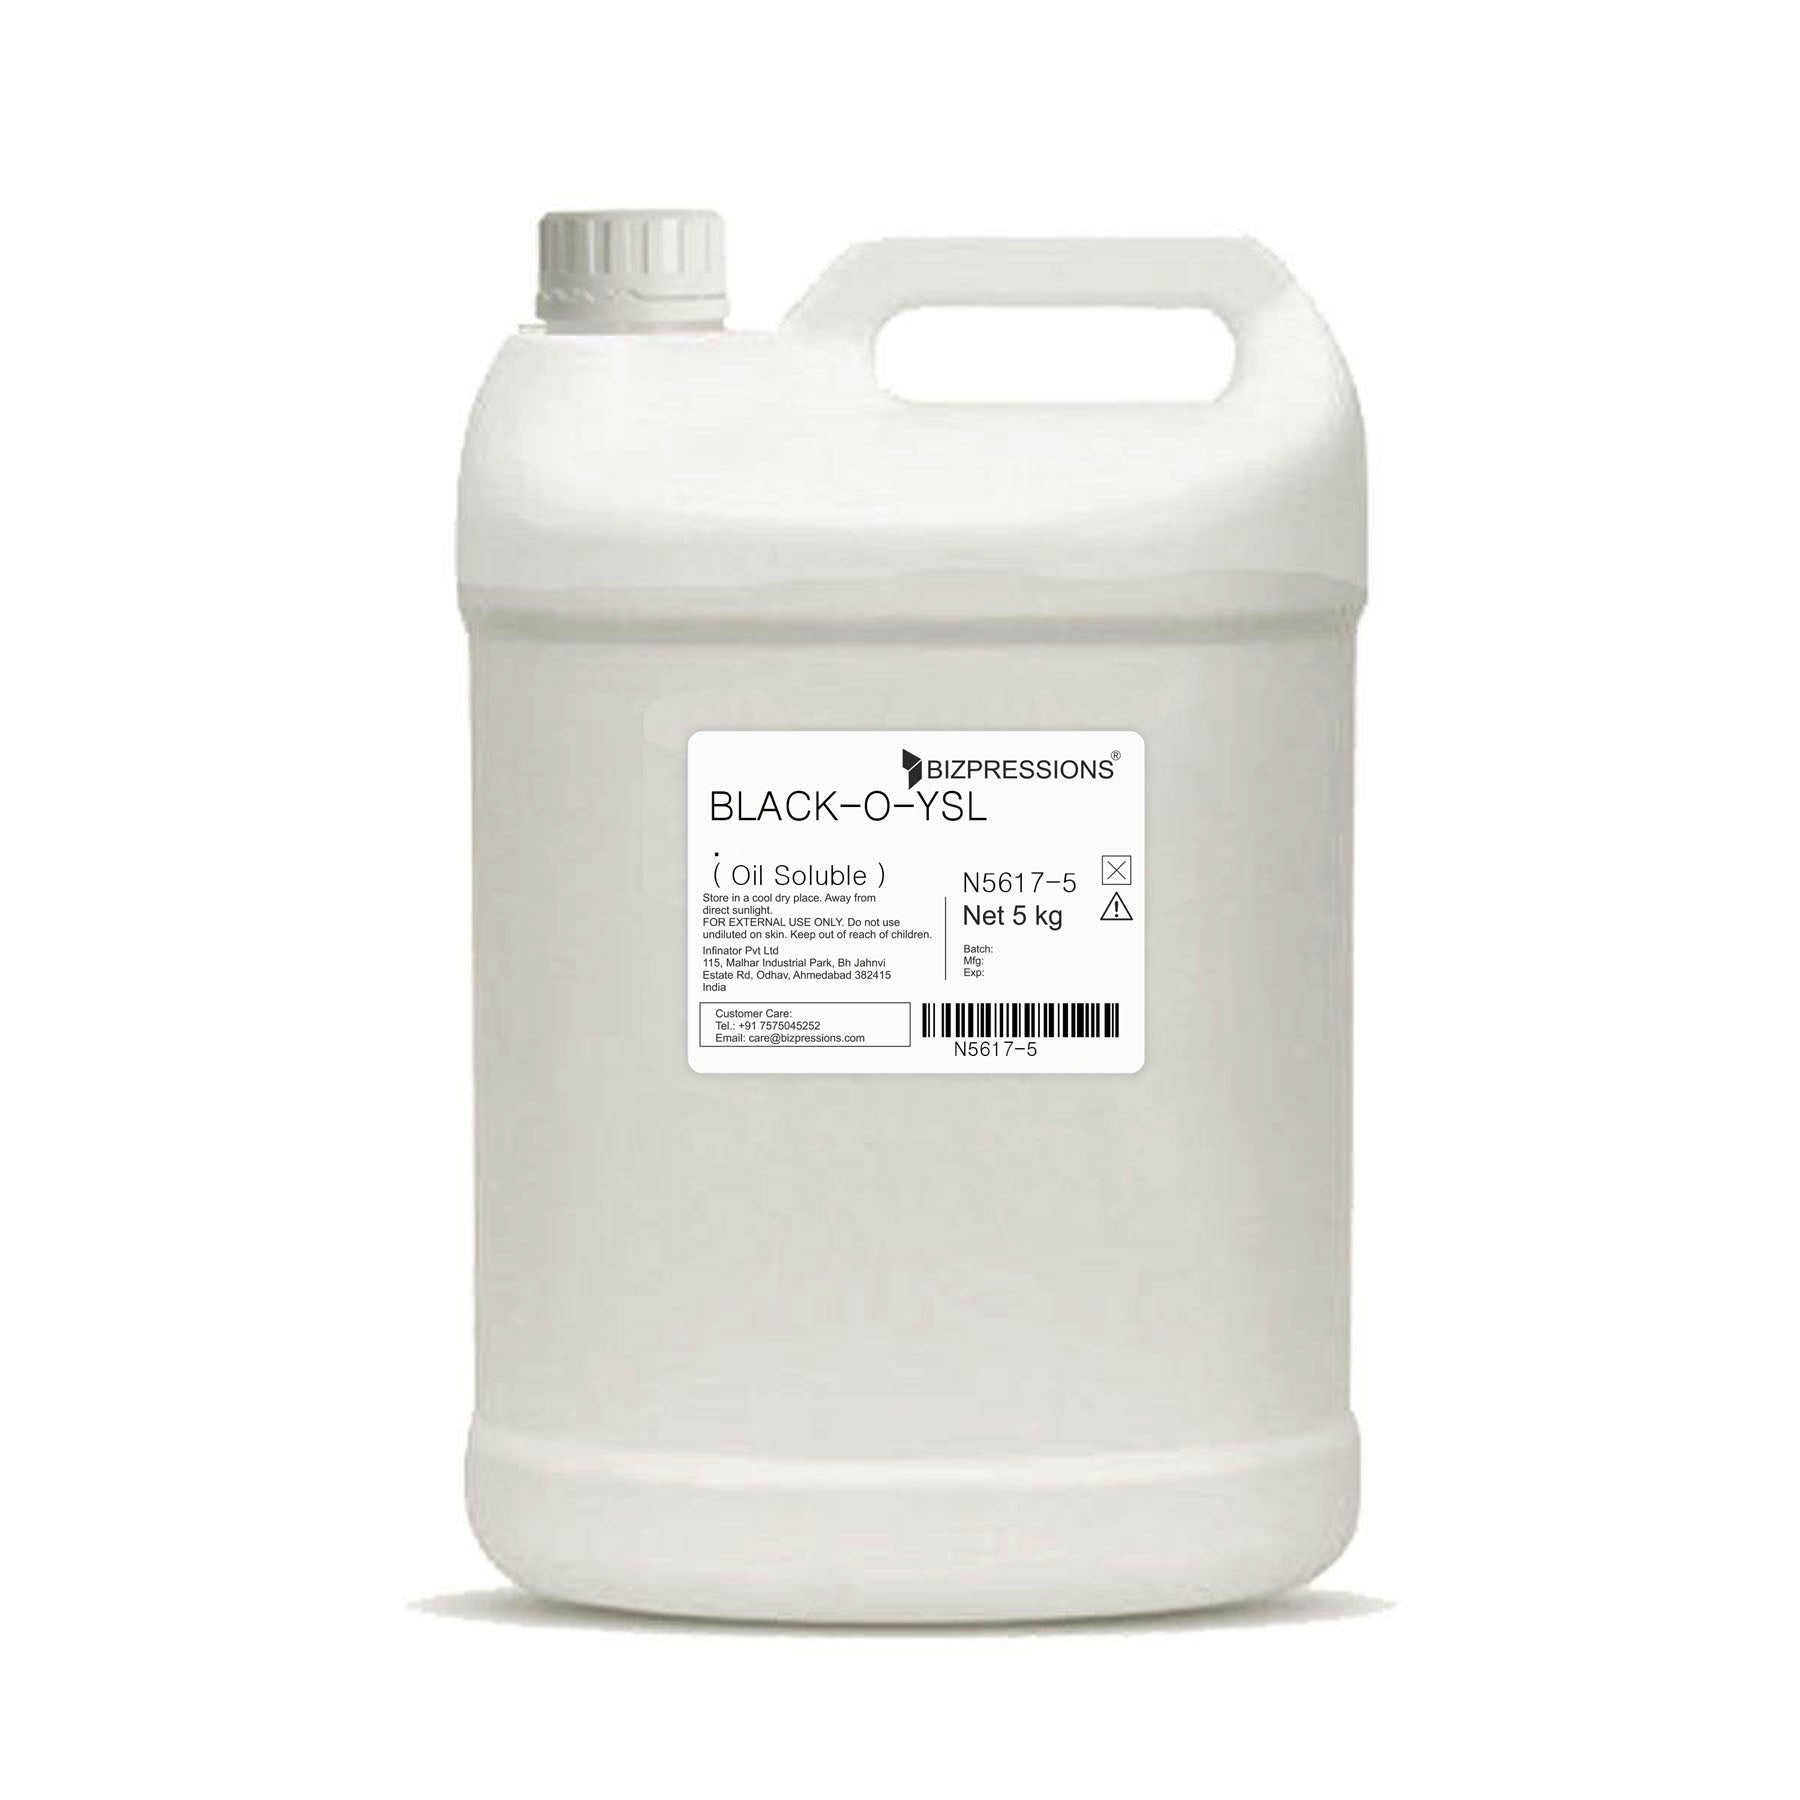 BLACK-O-YSL - Fragrance ( Oil Soluble ) - 5 kg